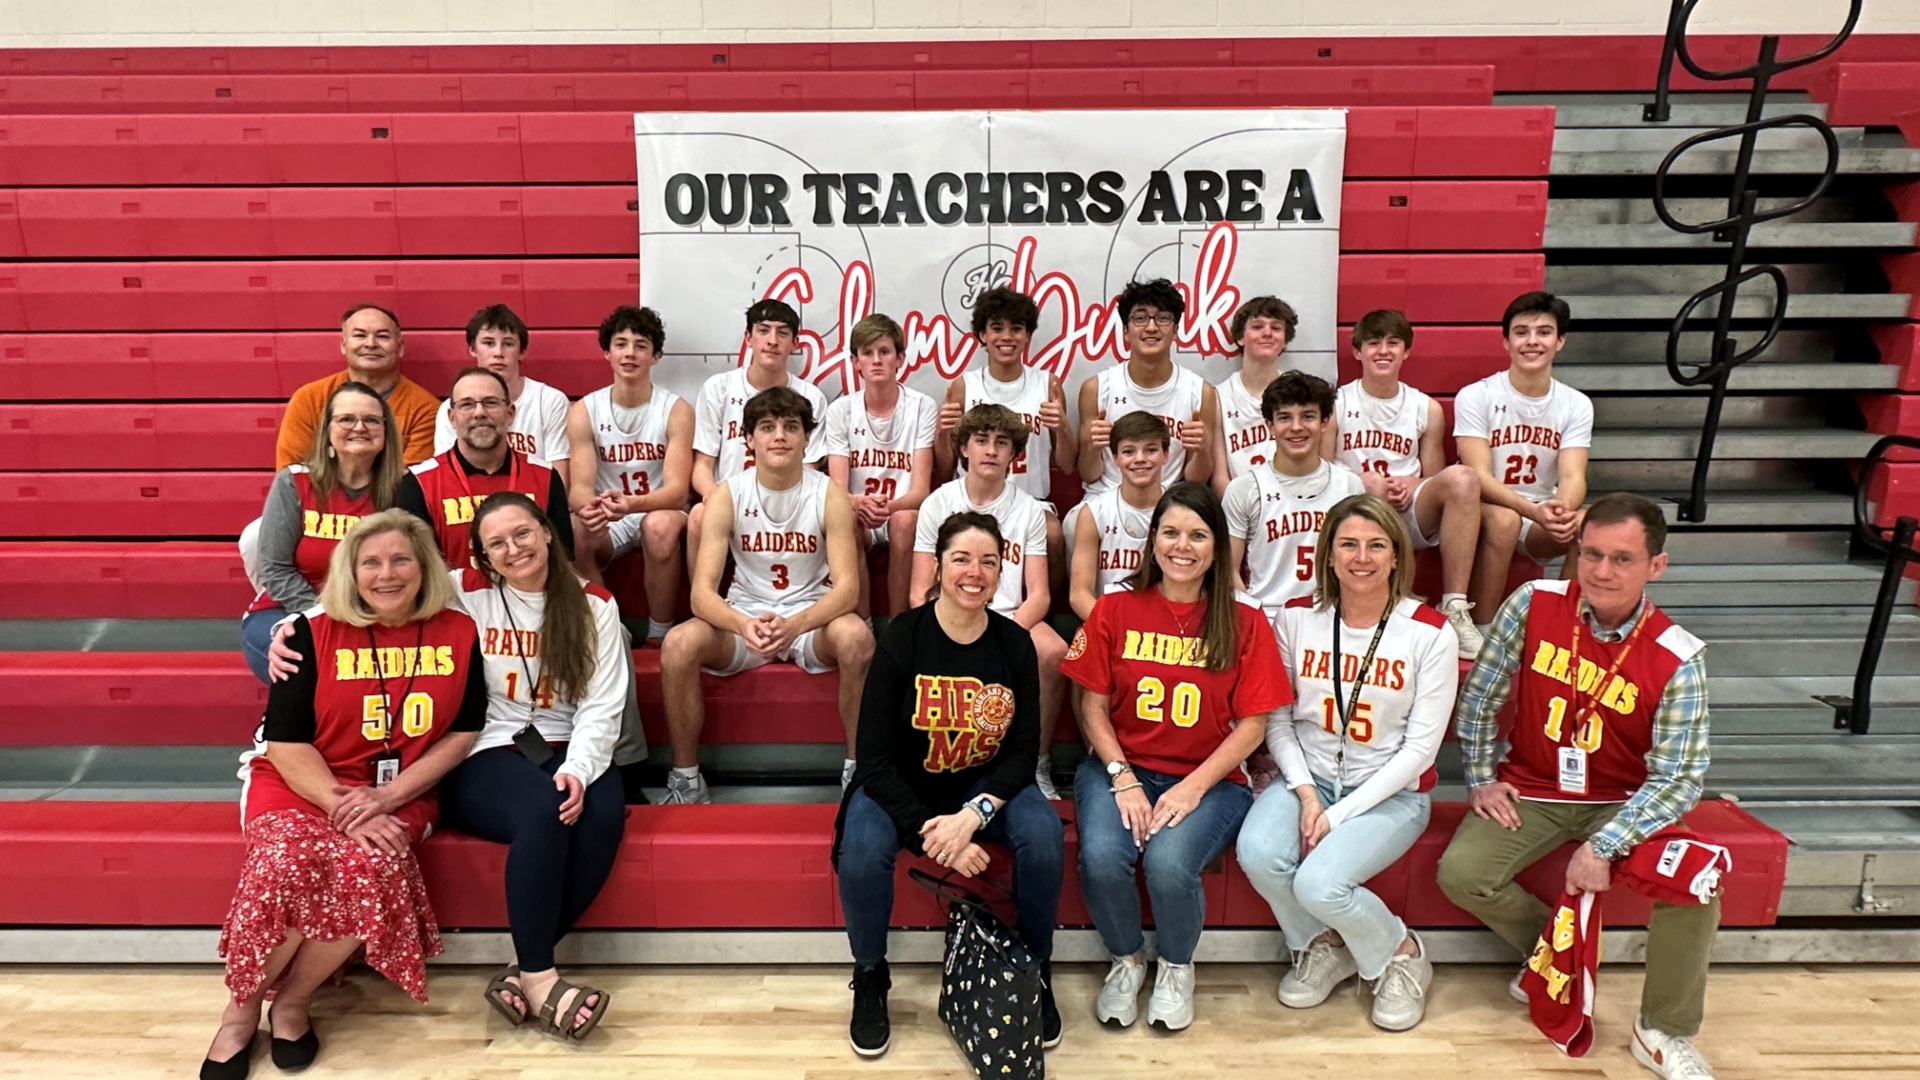 Slide 3 - 8th Raiders Basketball Red Team - Teacher Appreciation Night